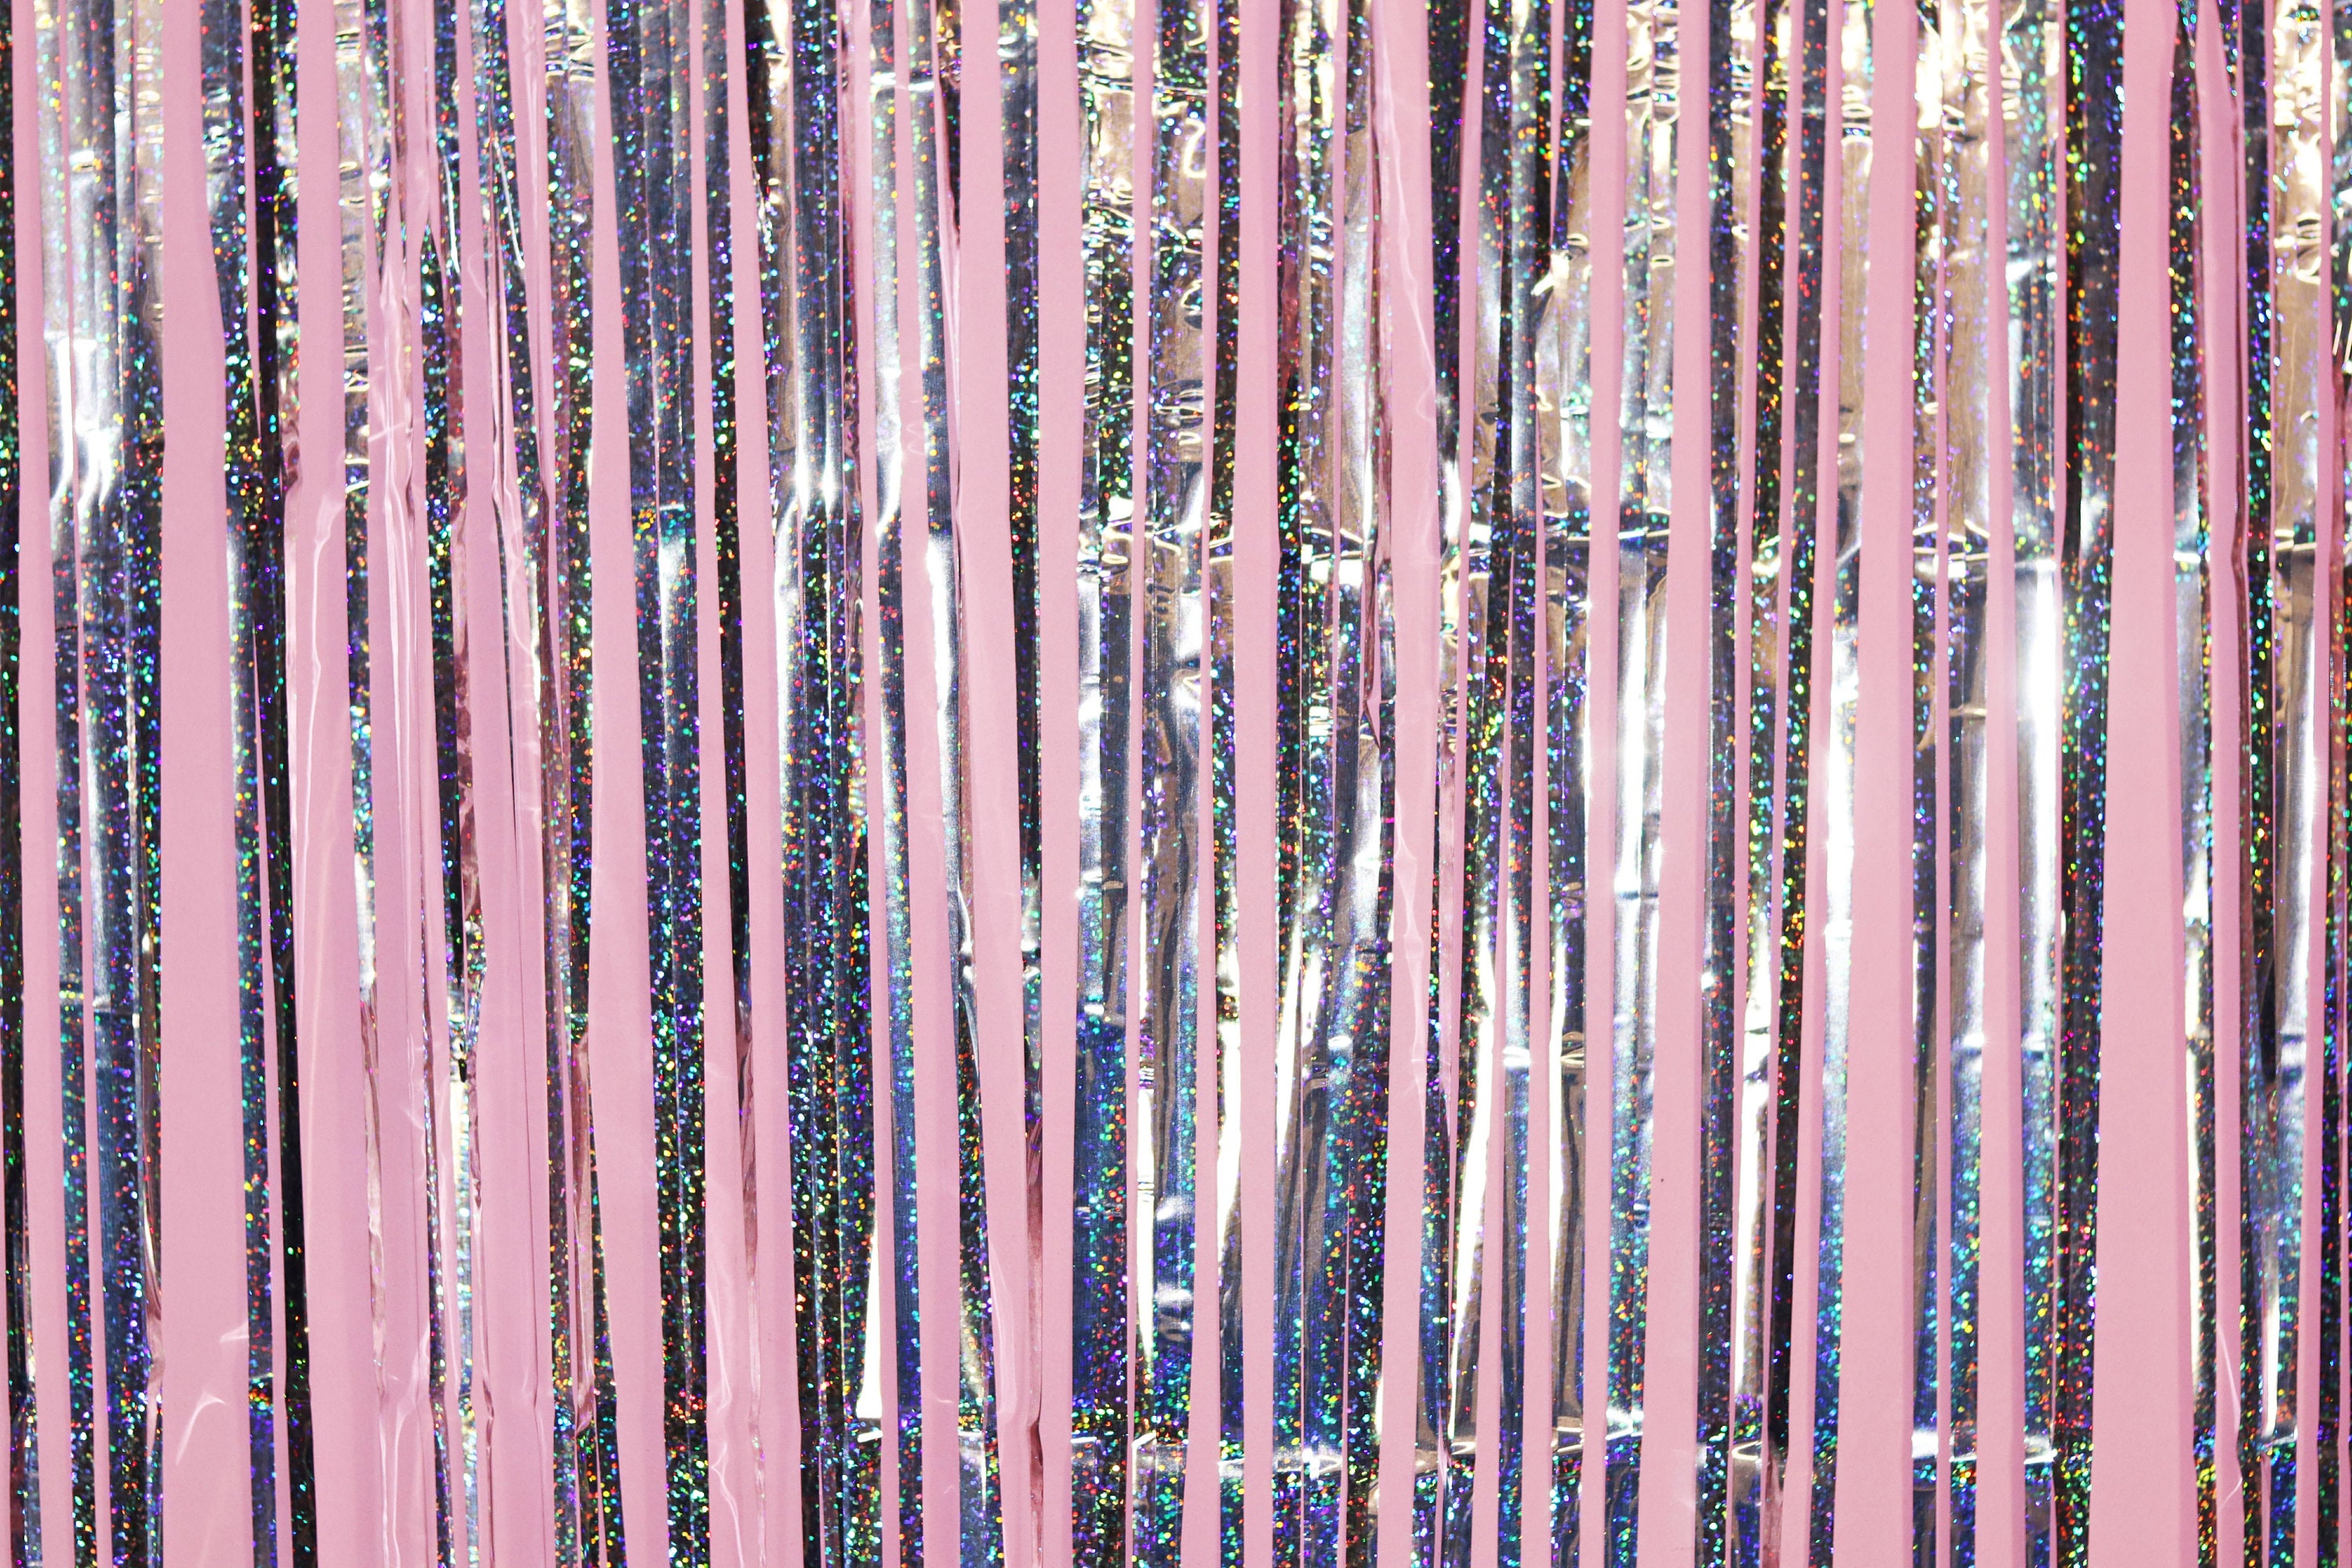 Tinsel Fringe 8 Wide Tinsel Trim JUWAIre Tinsel Garland Dance Costume Fringe Trimming Shiny Foil Effect Party Decor Tassel Lace (5 Y,Multi-Rainbow)